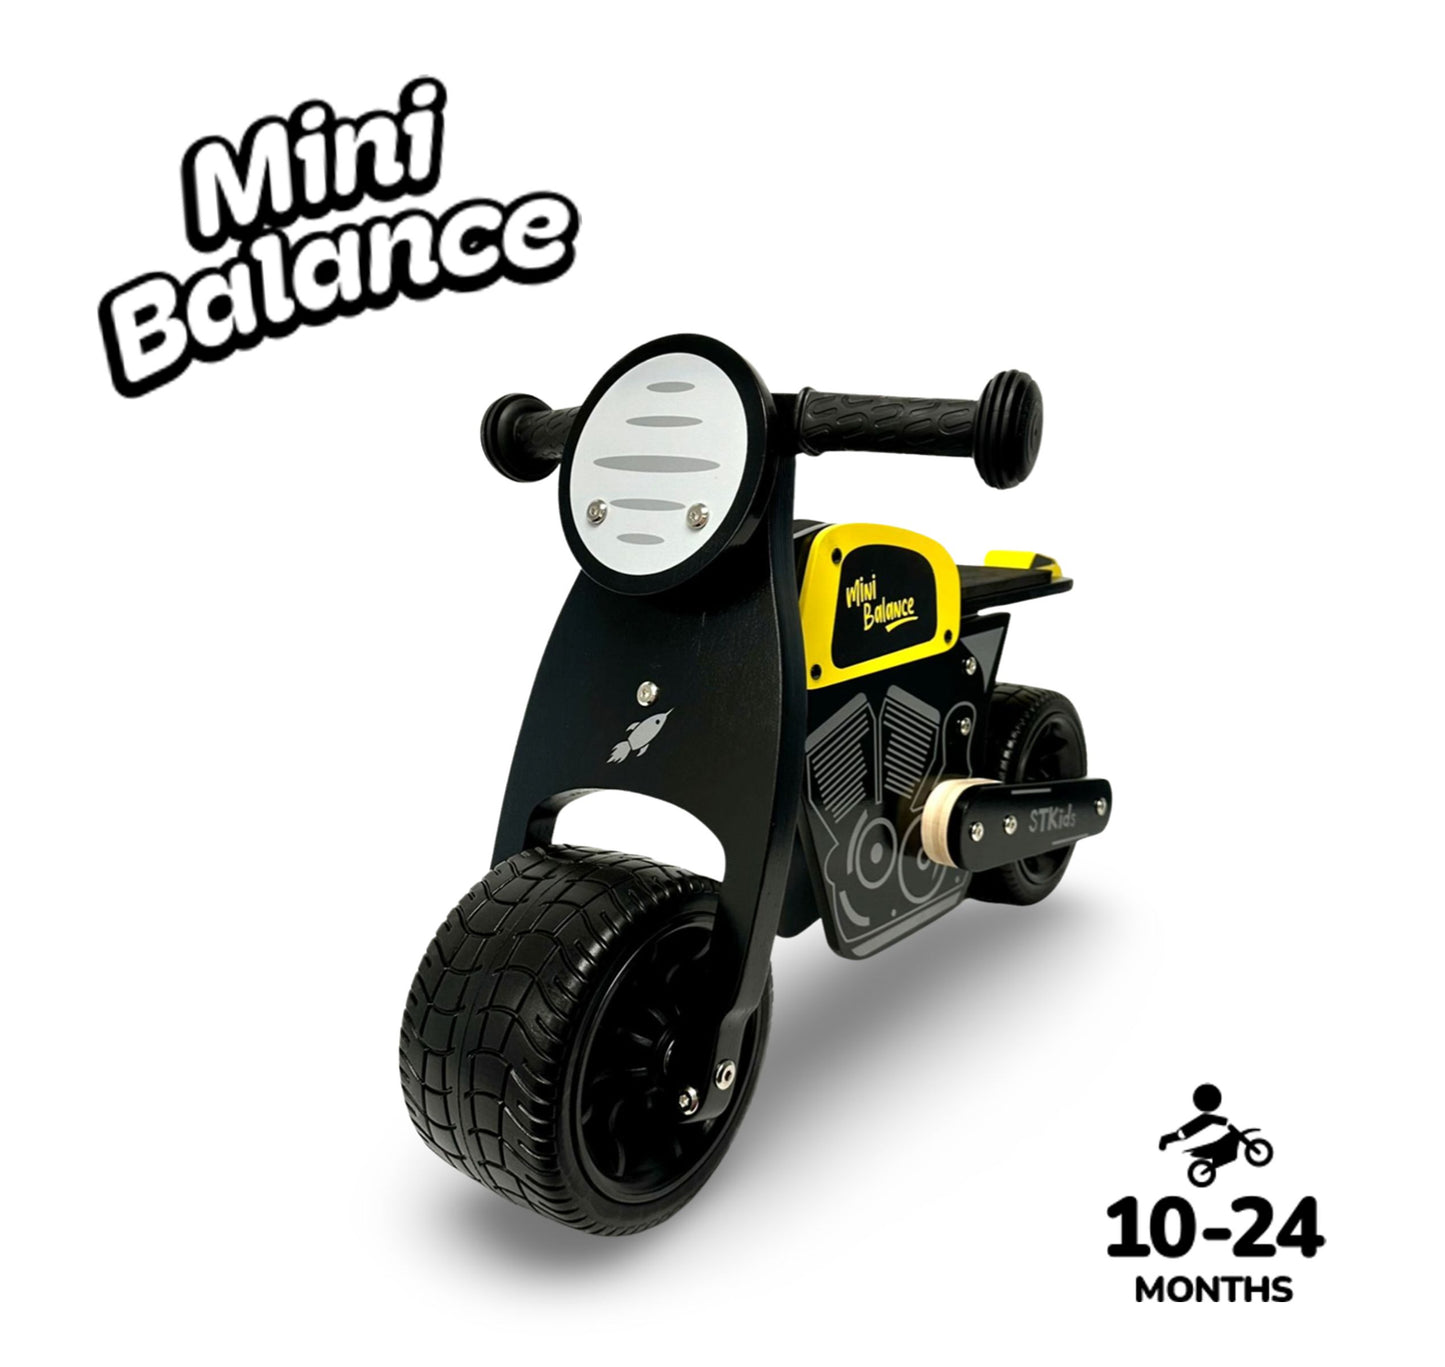 Ride-On MiniBalance Cafe Racer